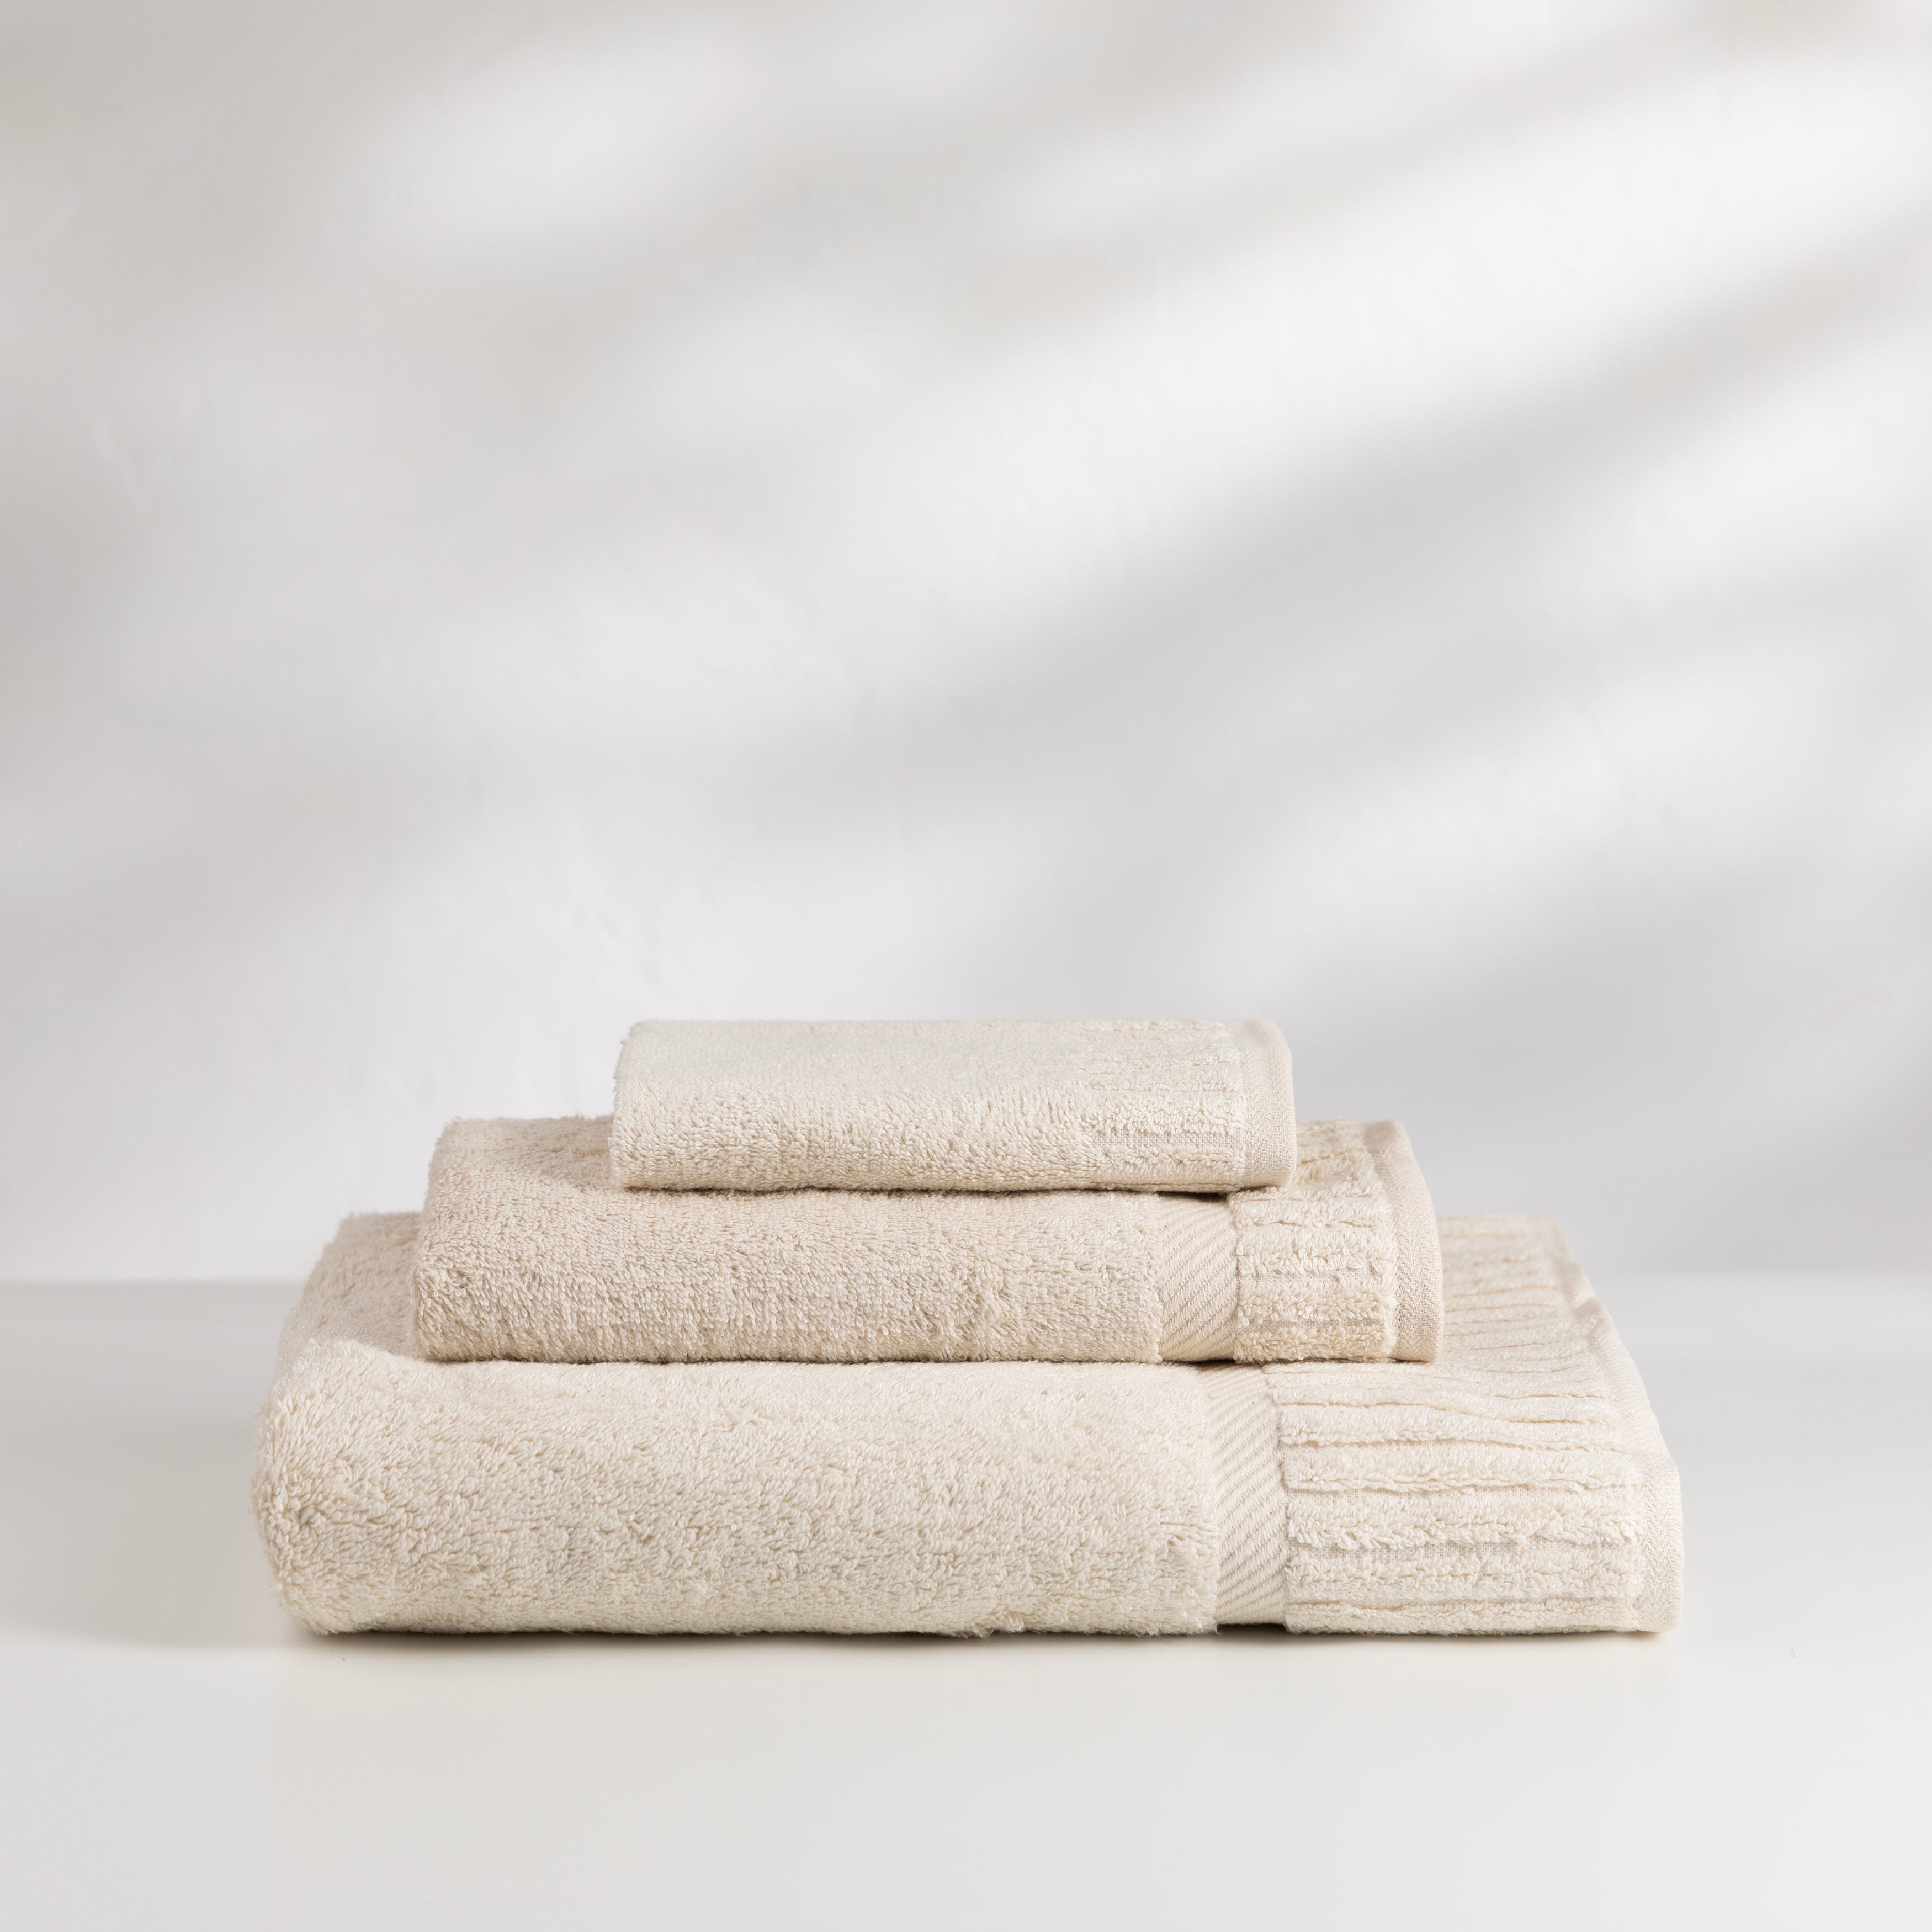 Star Wars Decorative Towel Set, Decorative Bar or Kitchen Towel Set of 3 